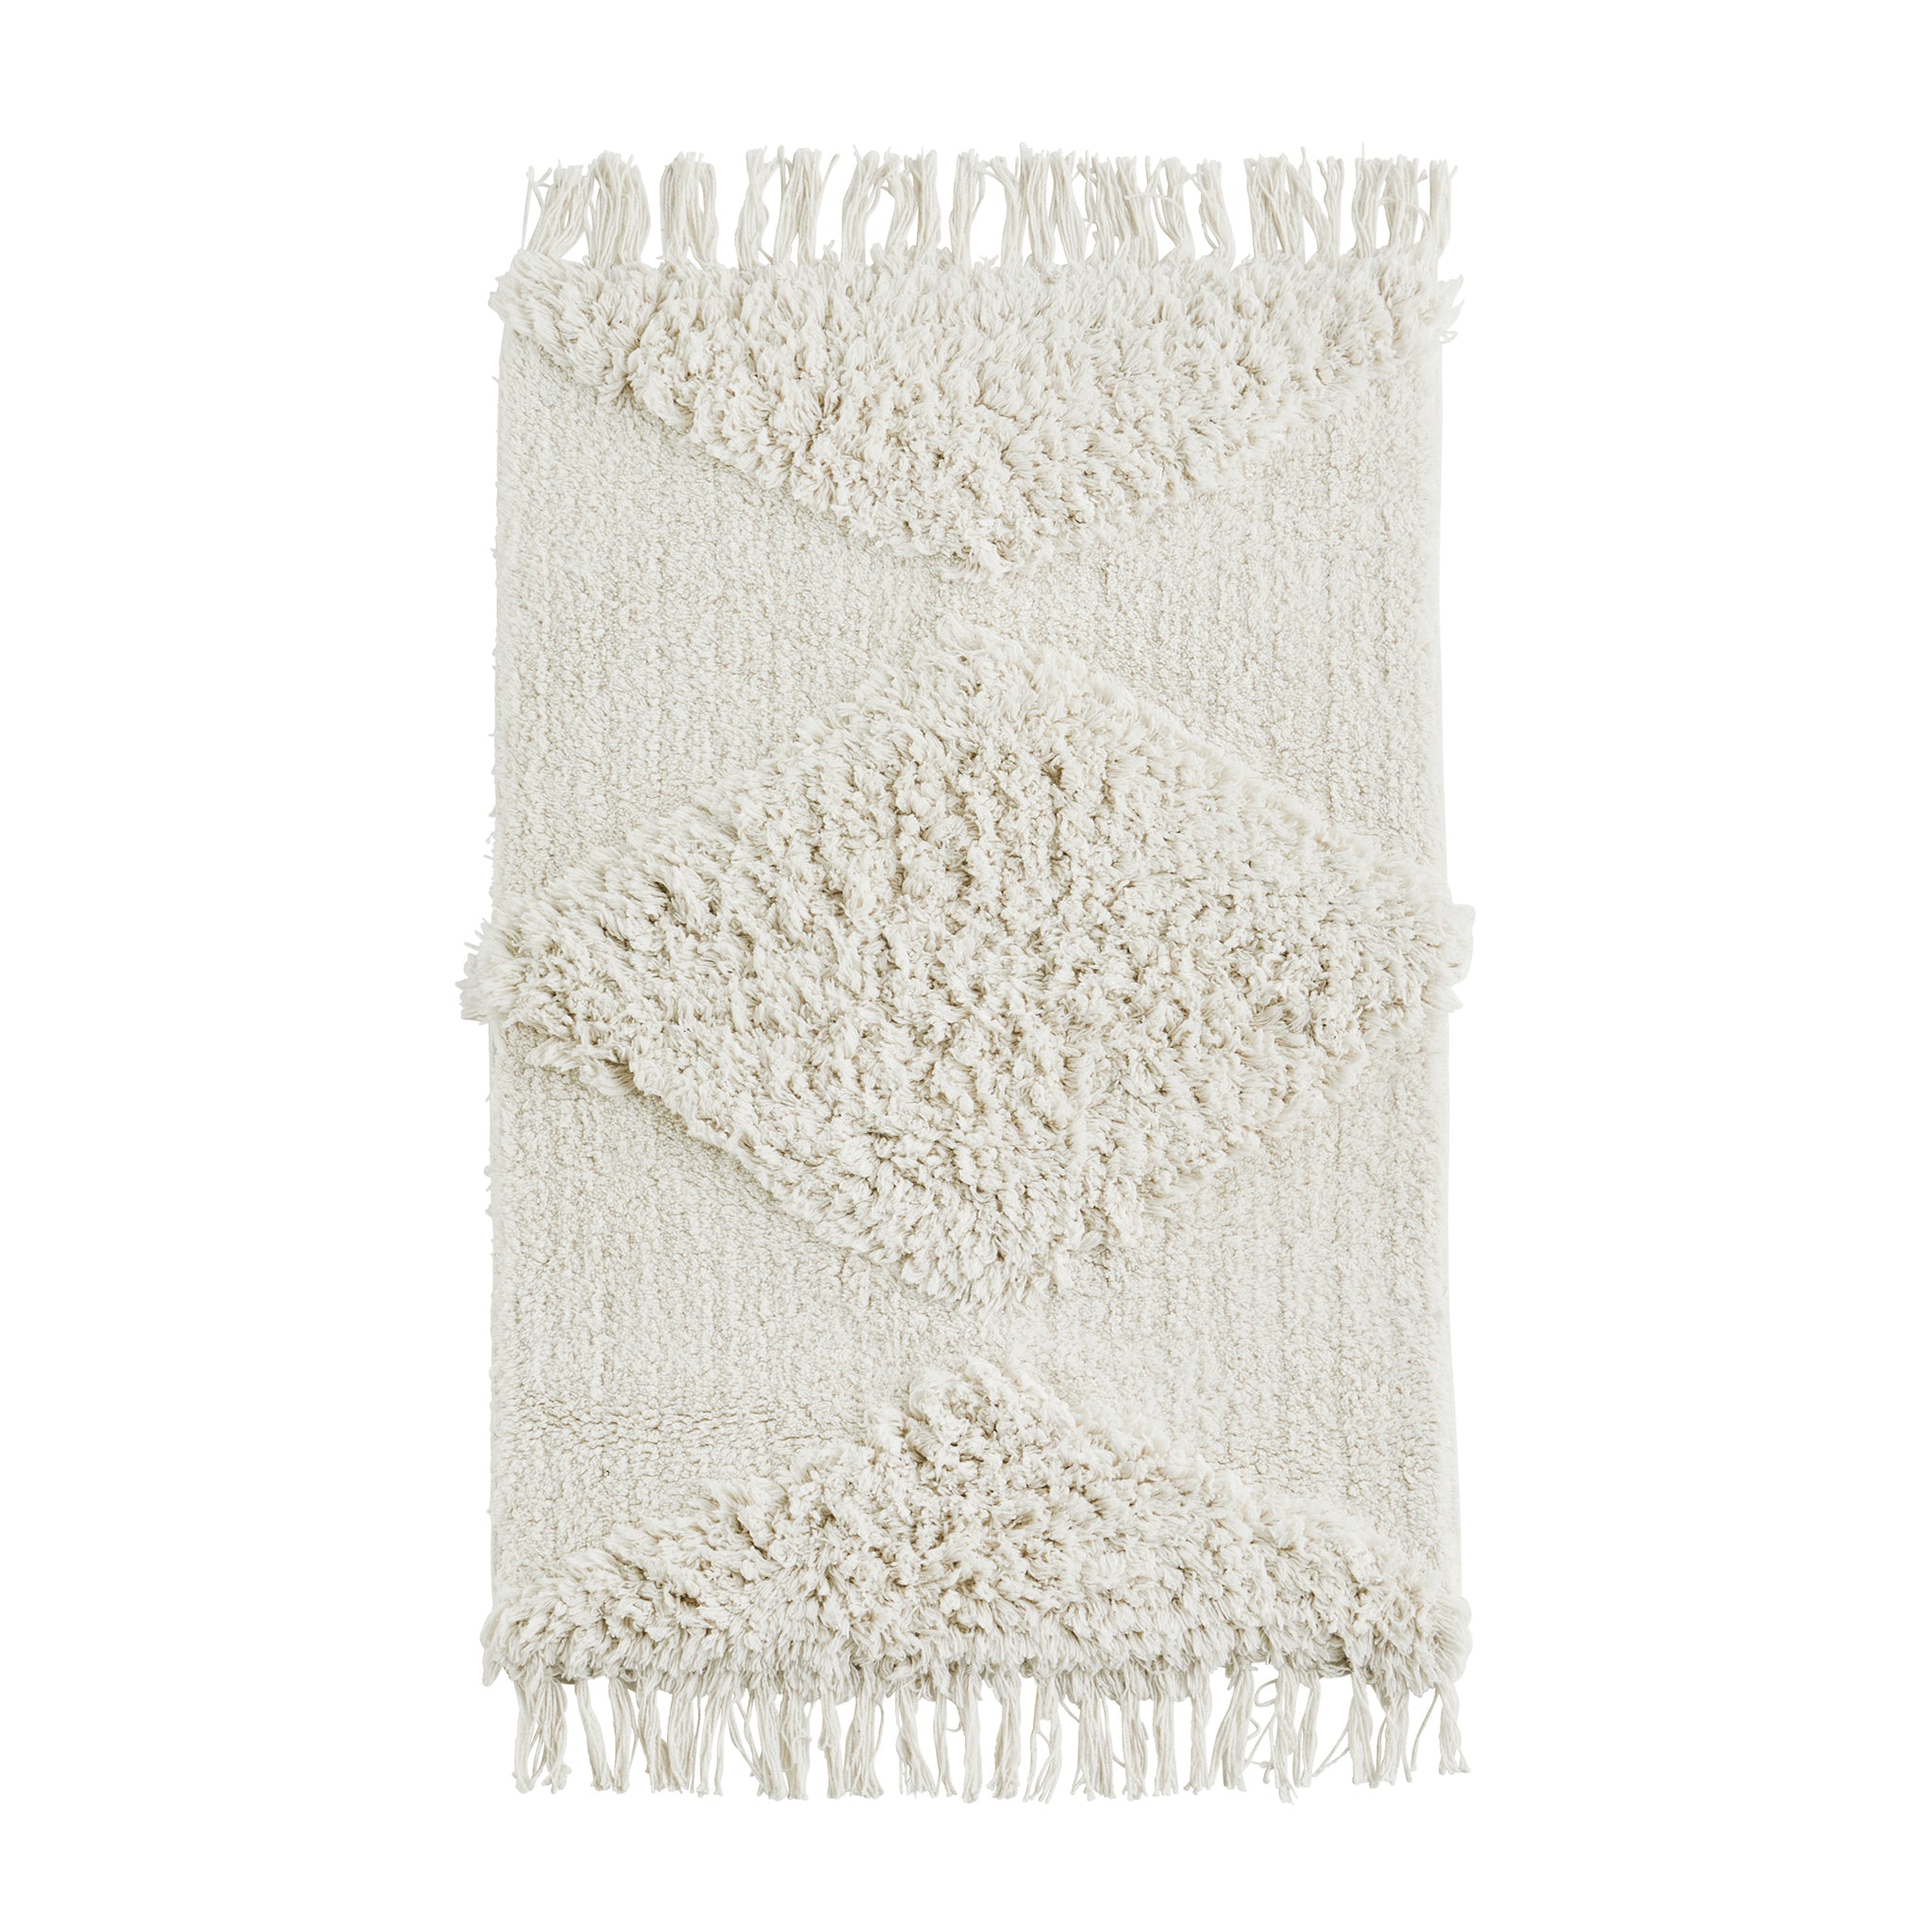 Standard Textile - Tufted Bath Mat, White, 20 inchx60 inch, Size: Bath Runner 20x60